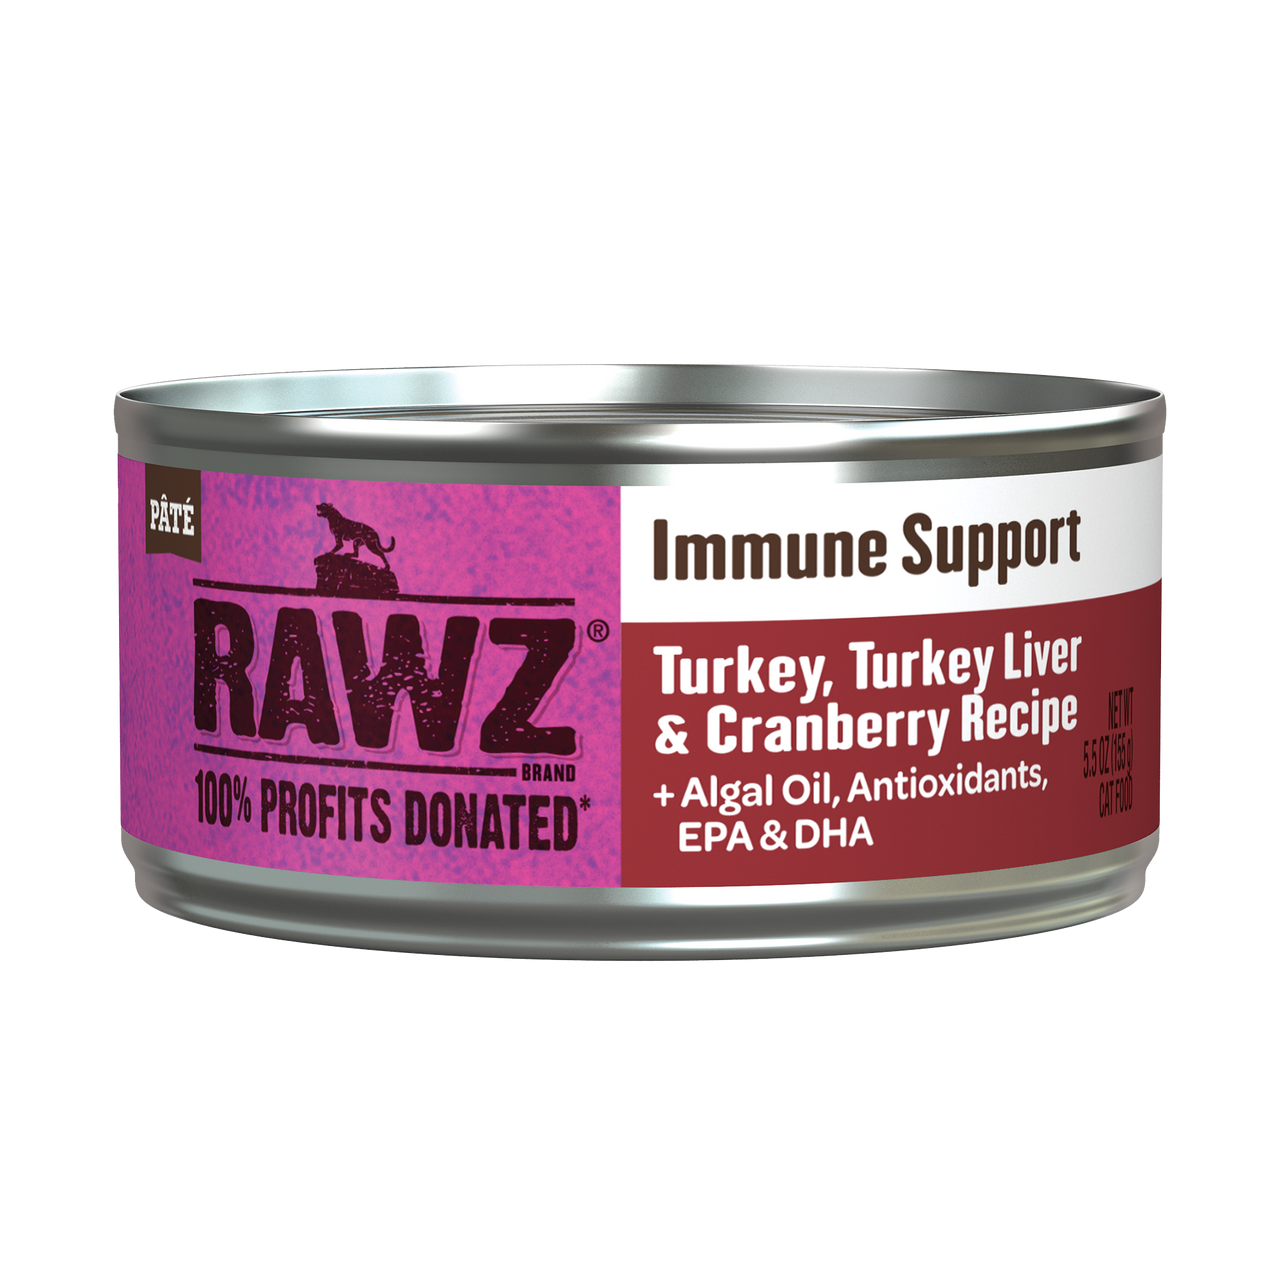 Rawz Immune Support Turkey, Turkey Liver Cat Canned 5.5oz